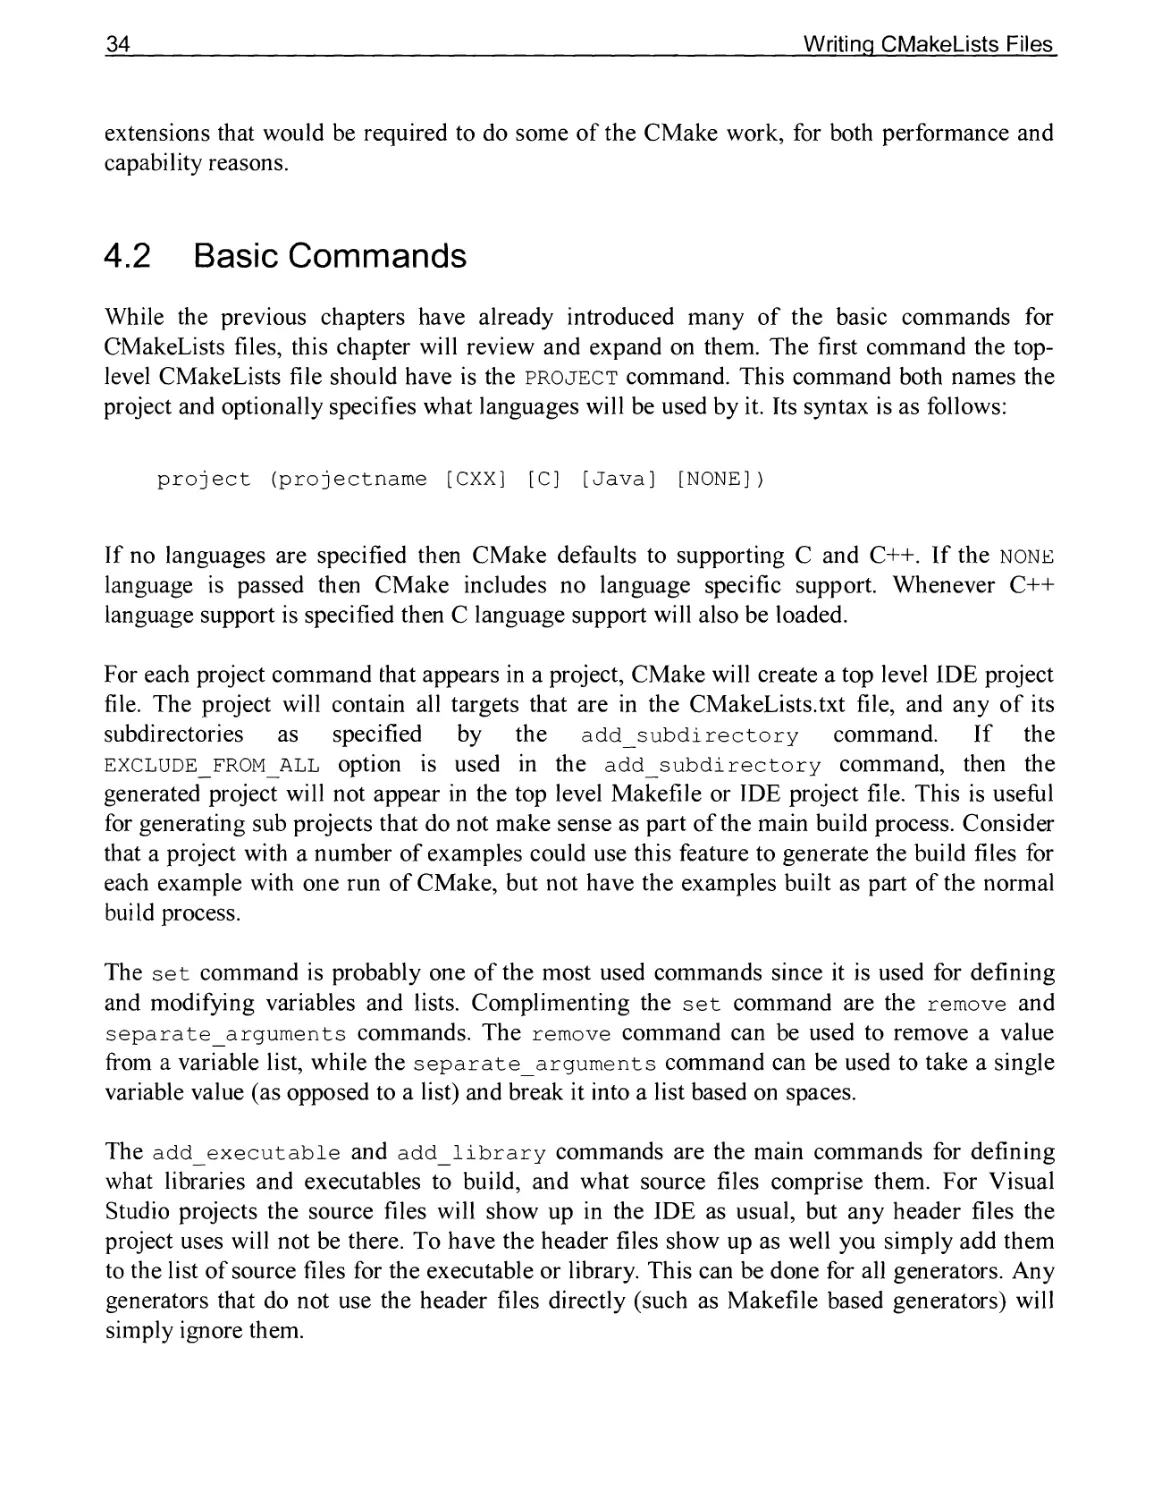 4.2 Basic Commands